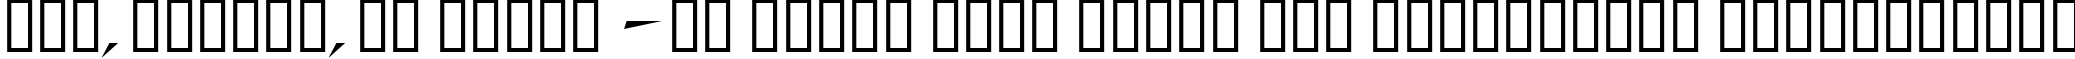 Пример написания шрифтом Schrill AOE Oblique текста на украинском